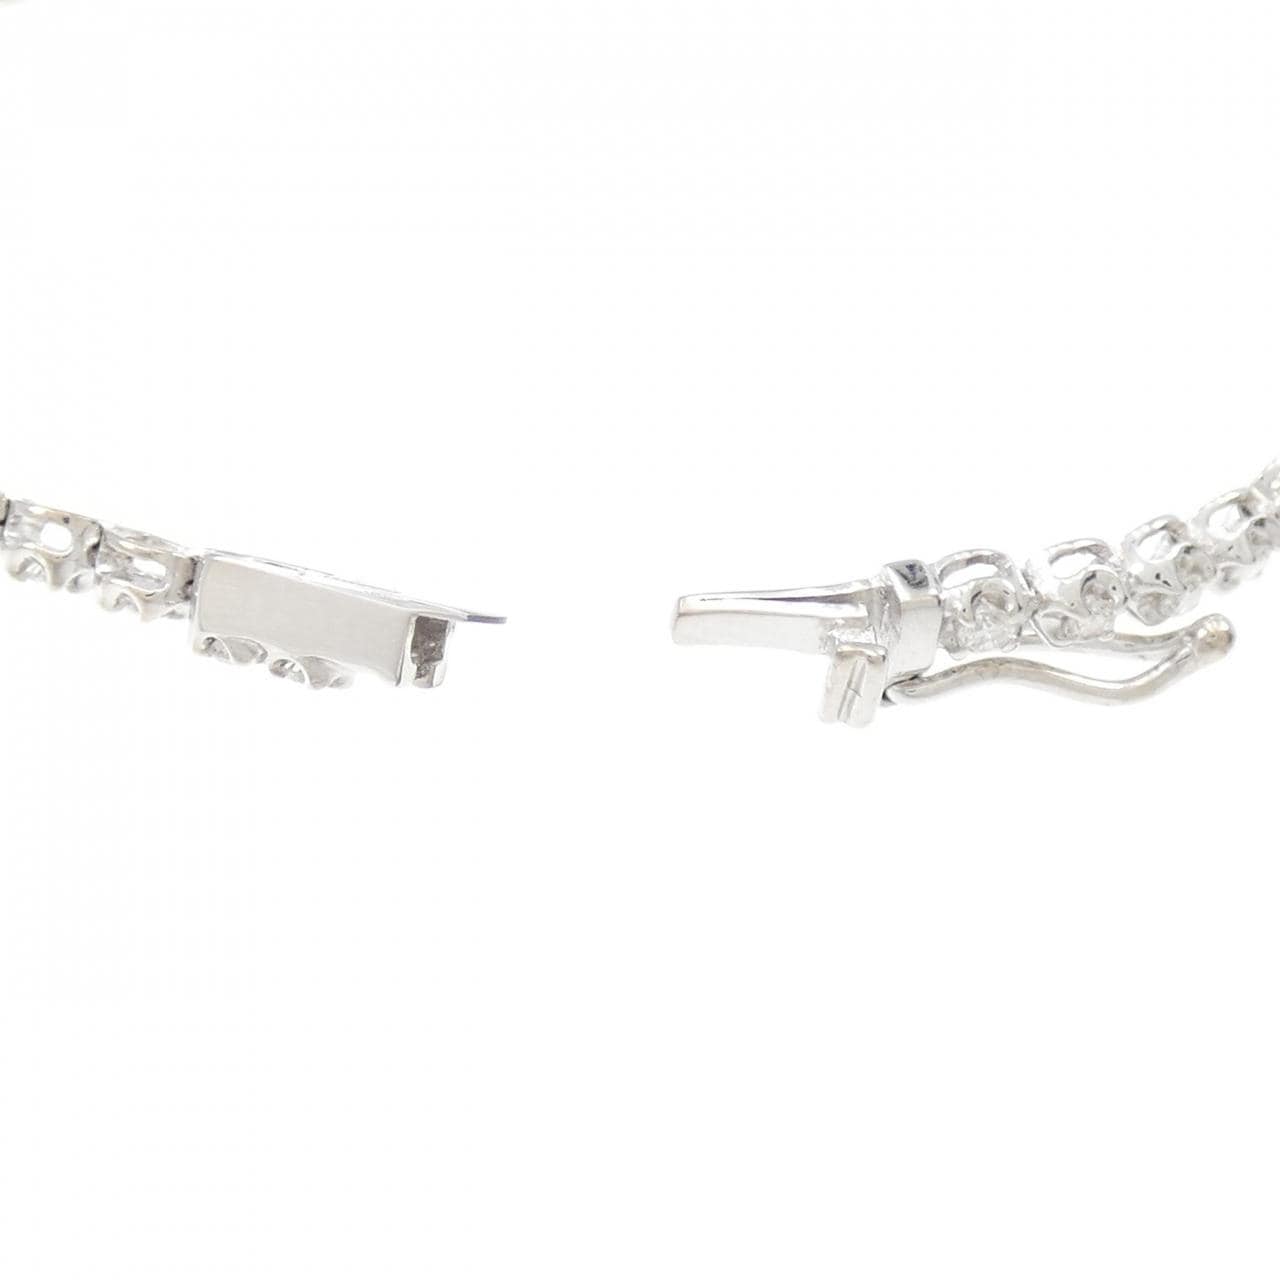 K18WG Diamond bracelet 1.0CT